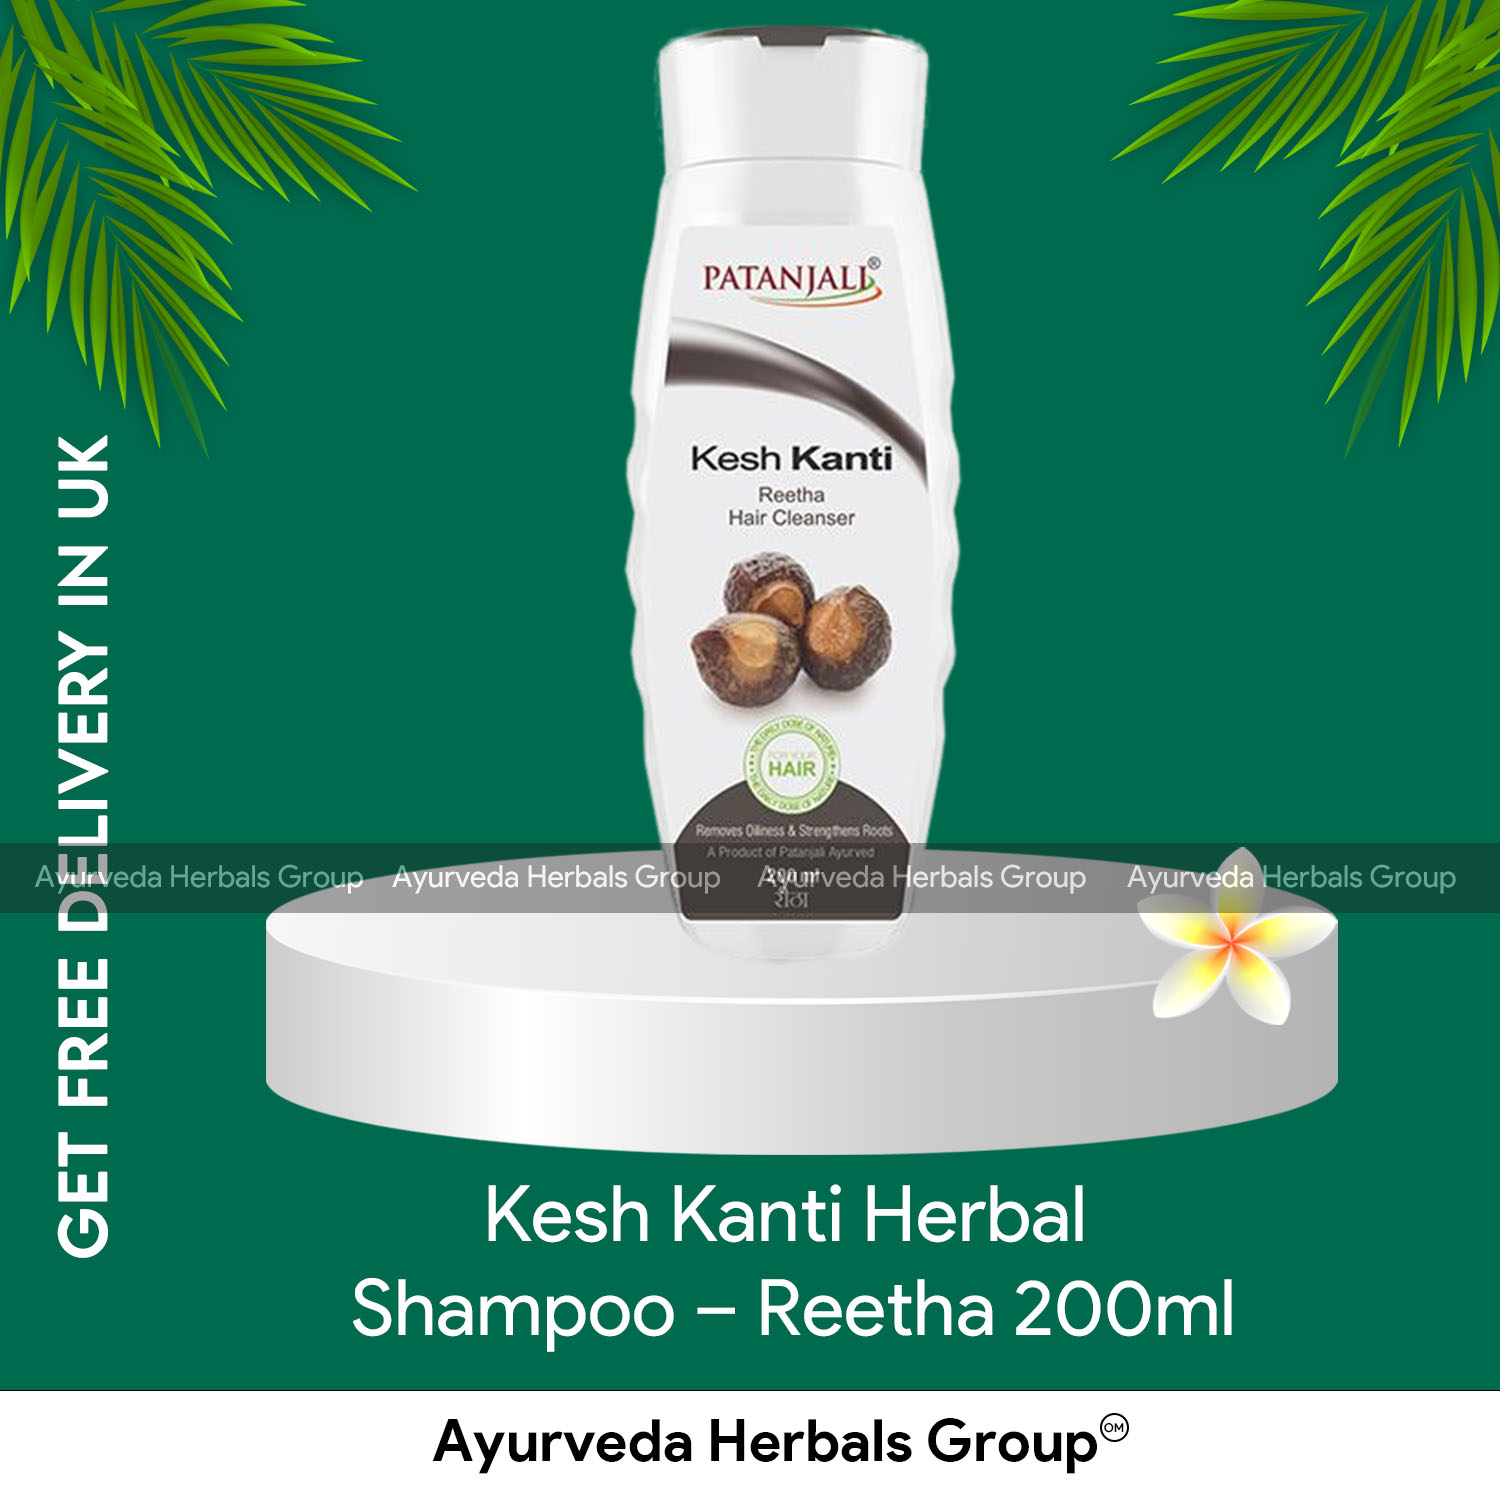 Kesh Kanti Herbal Shampoo – Reetha 200ml |